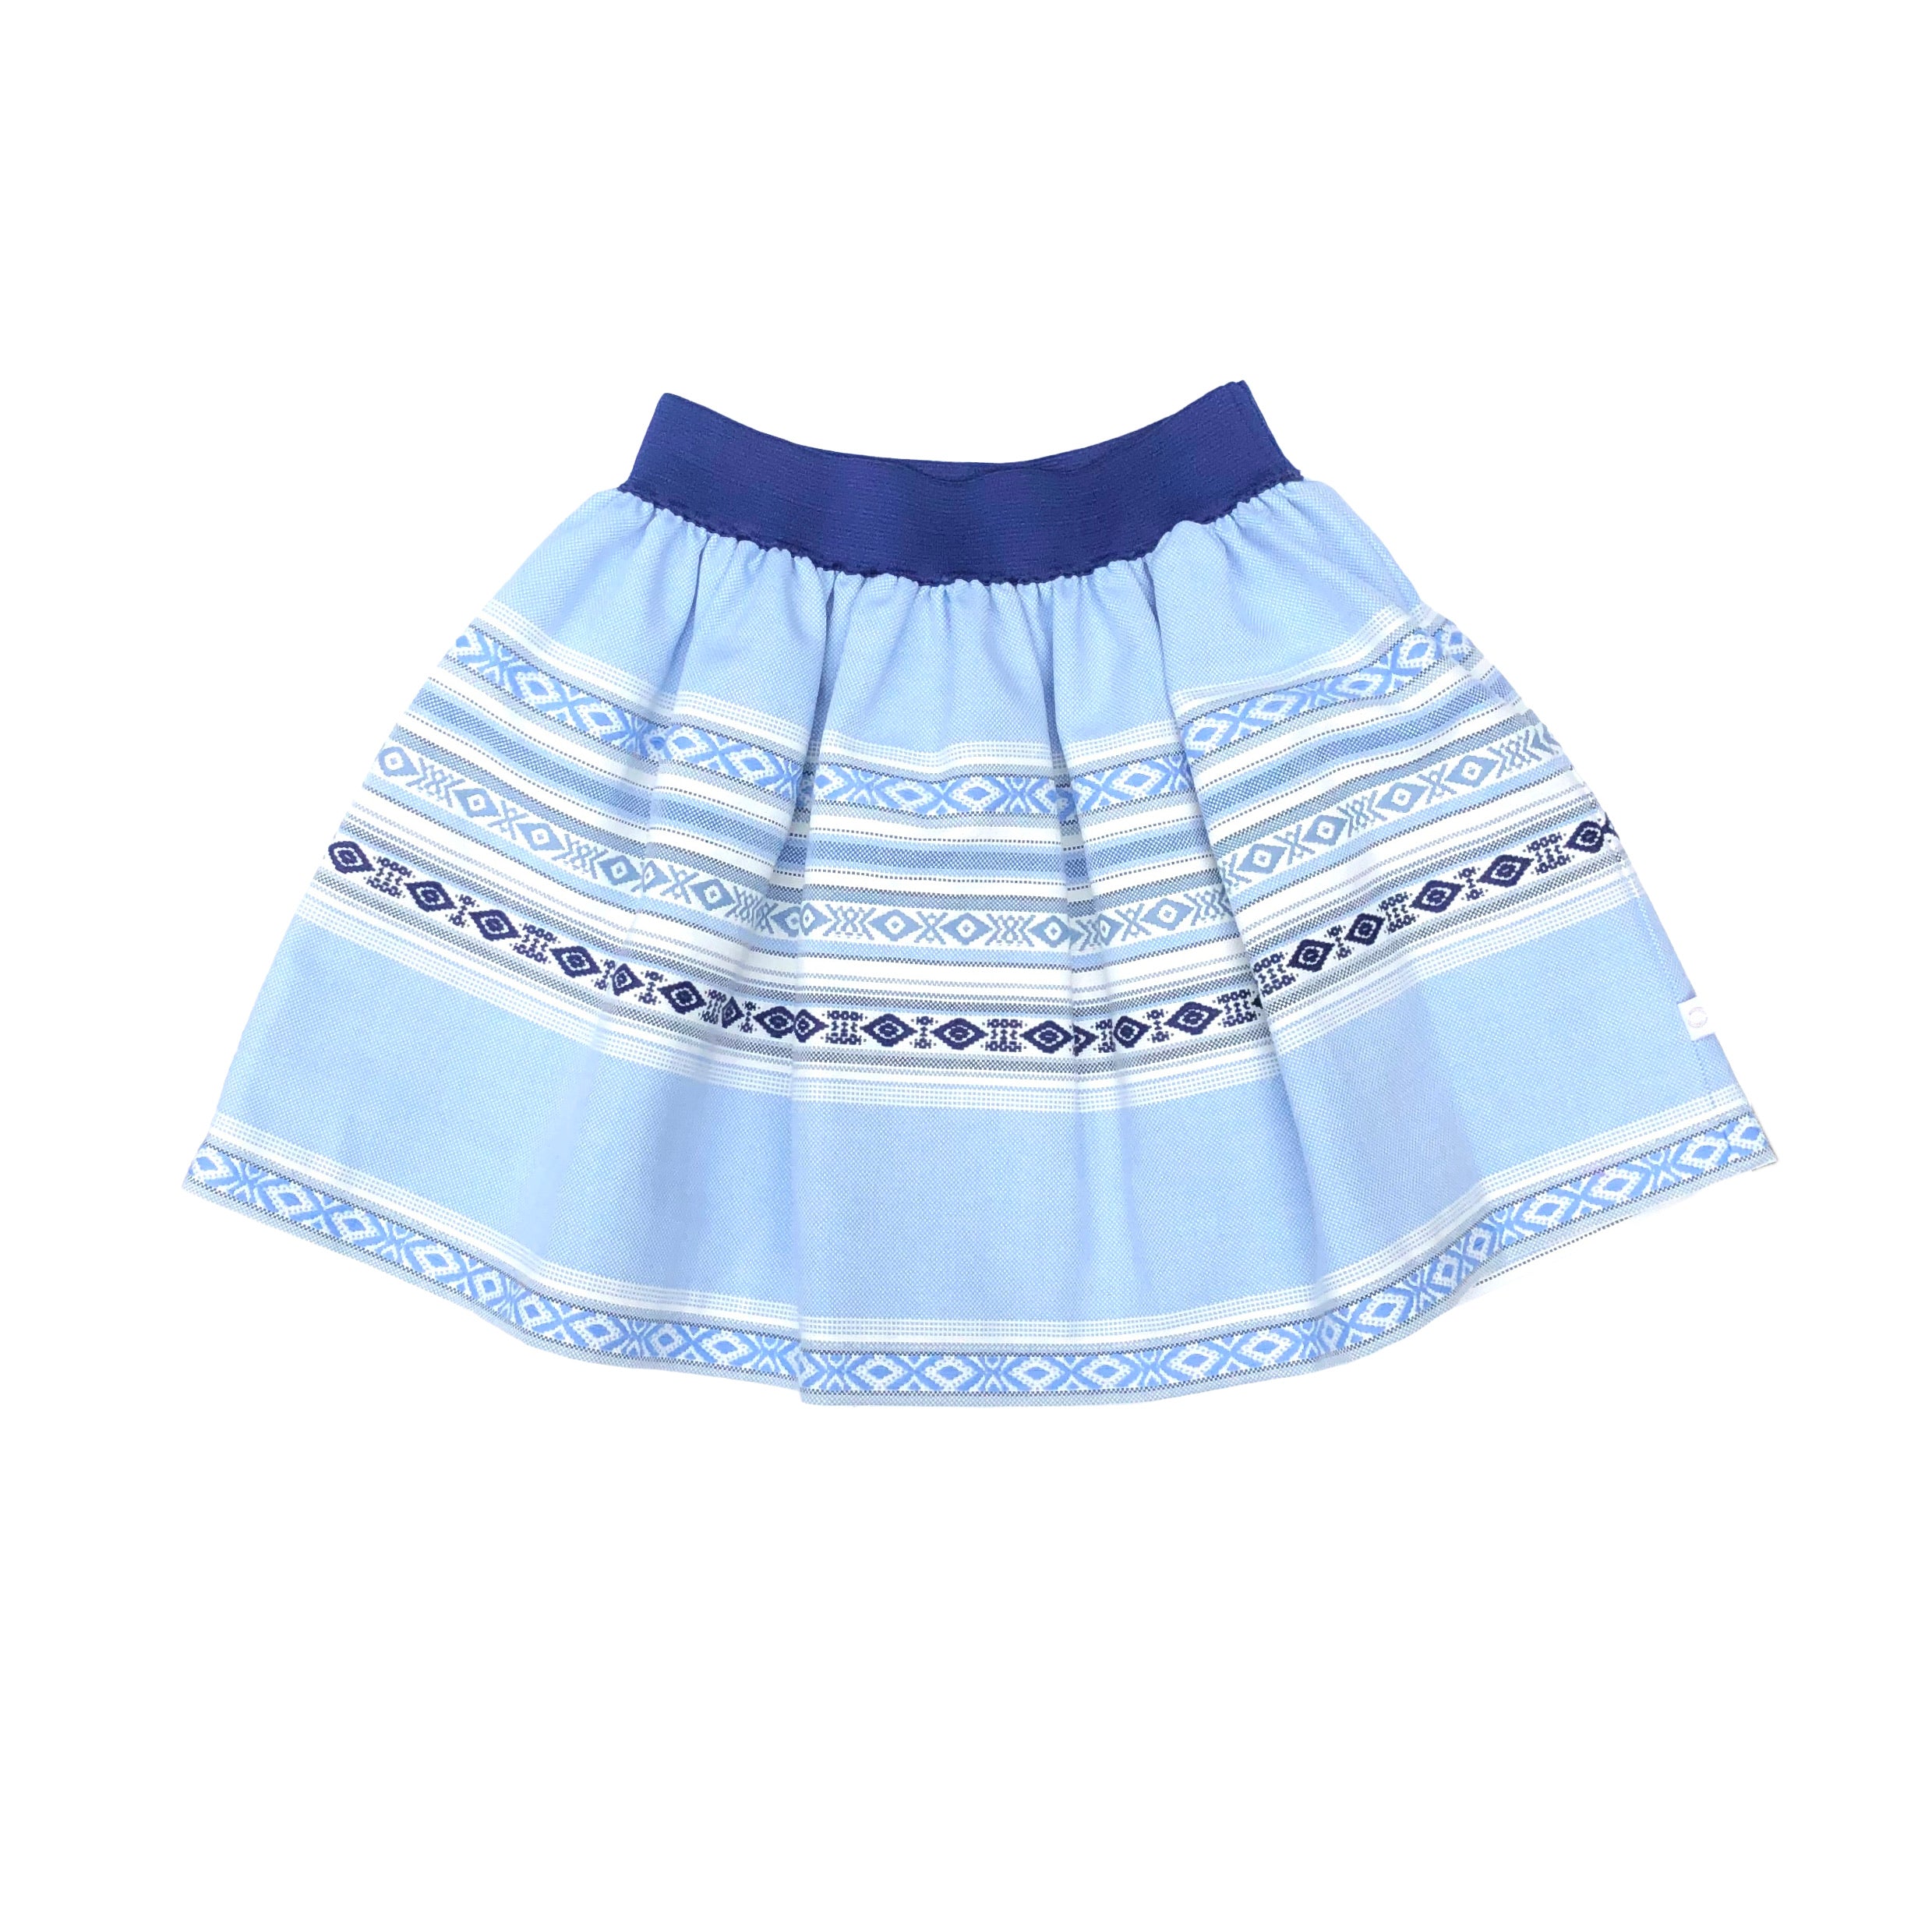 Blue Gathered Skirt